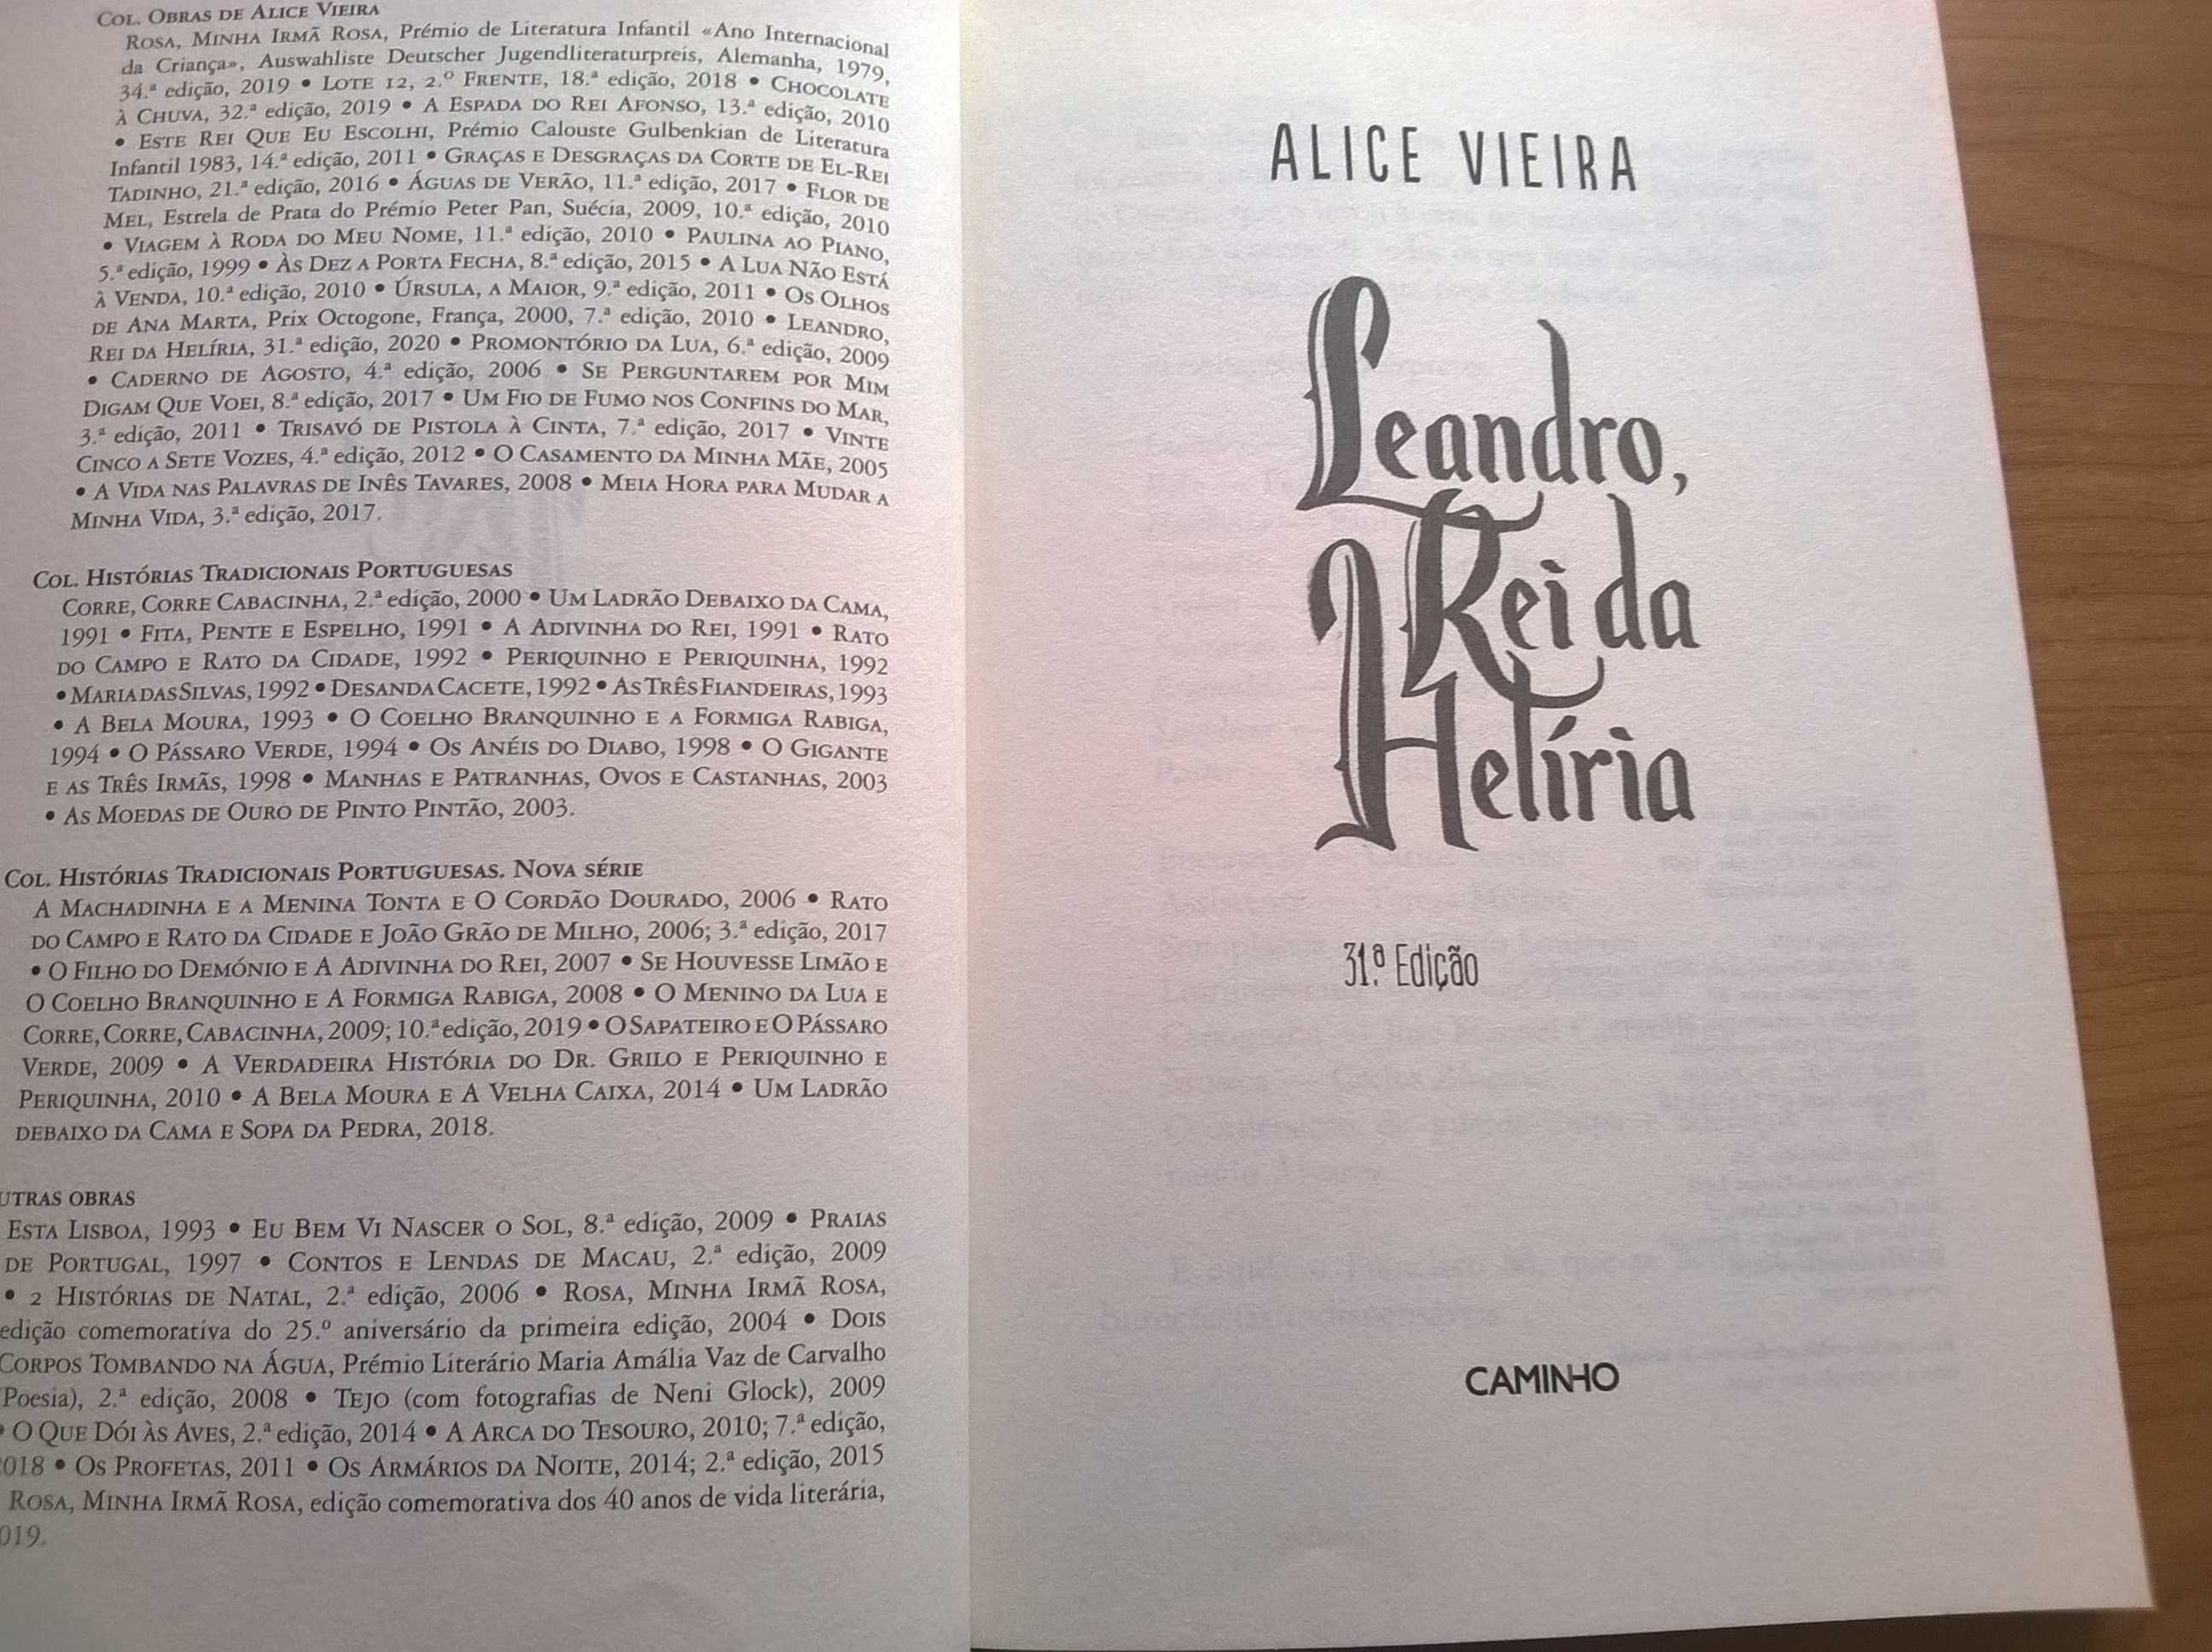 Leandro, Rei da Helíria - Alice Vieira